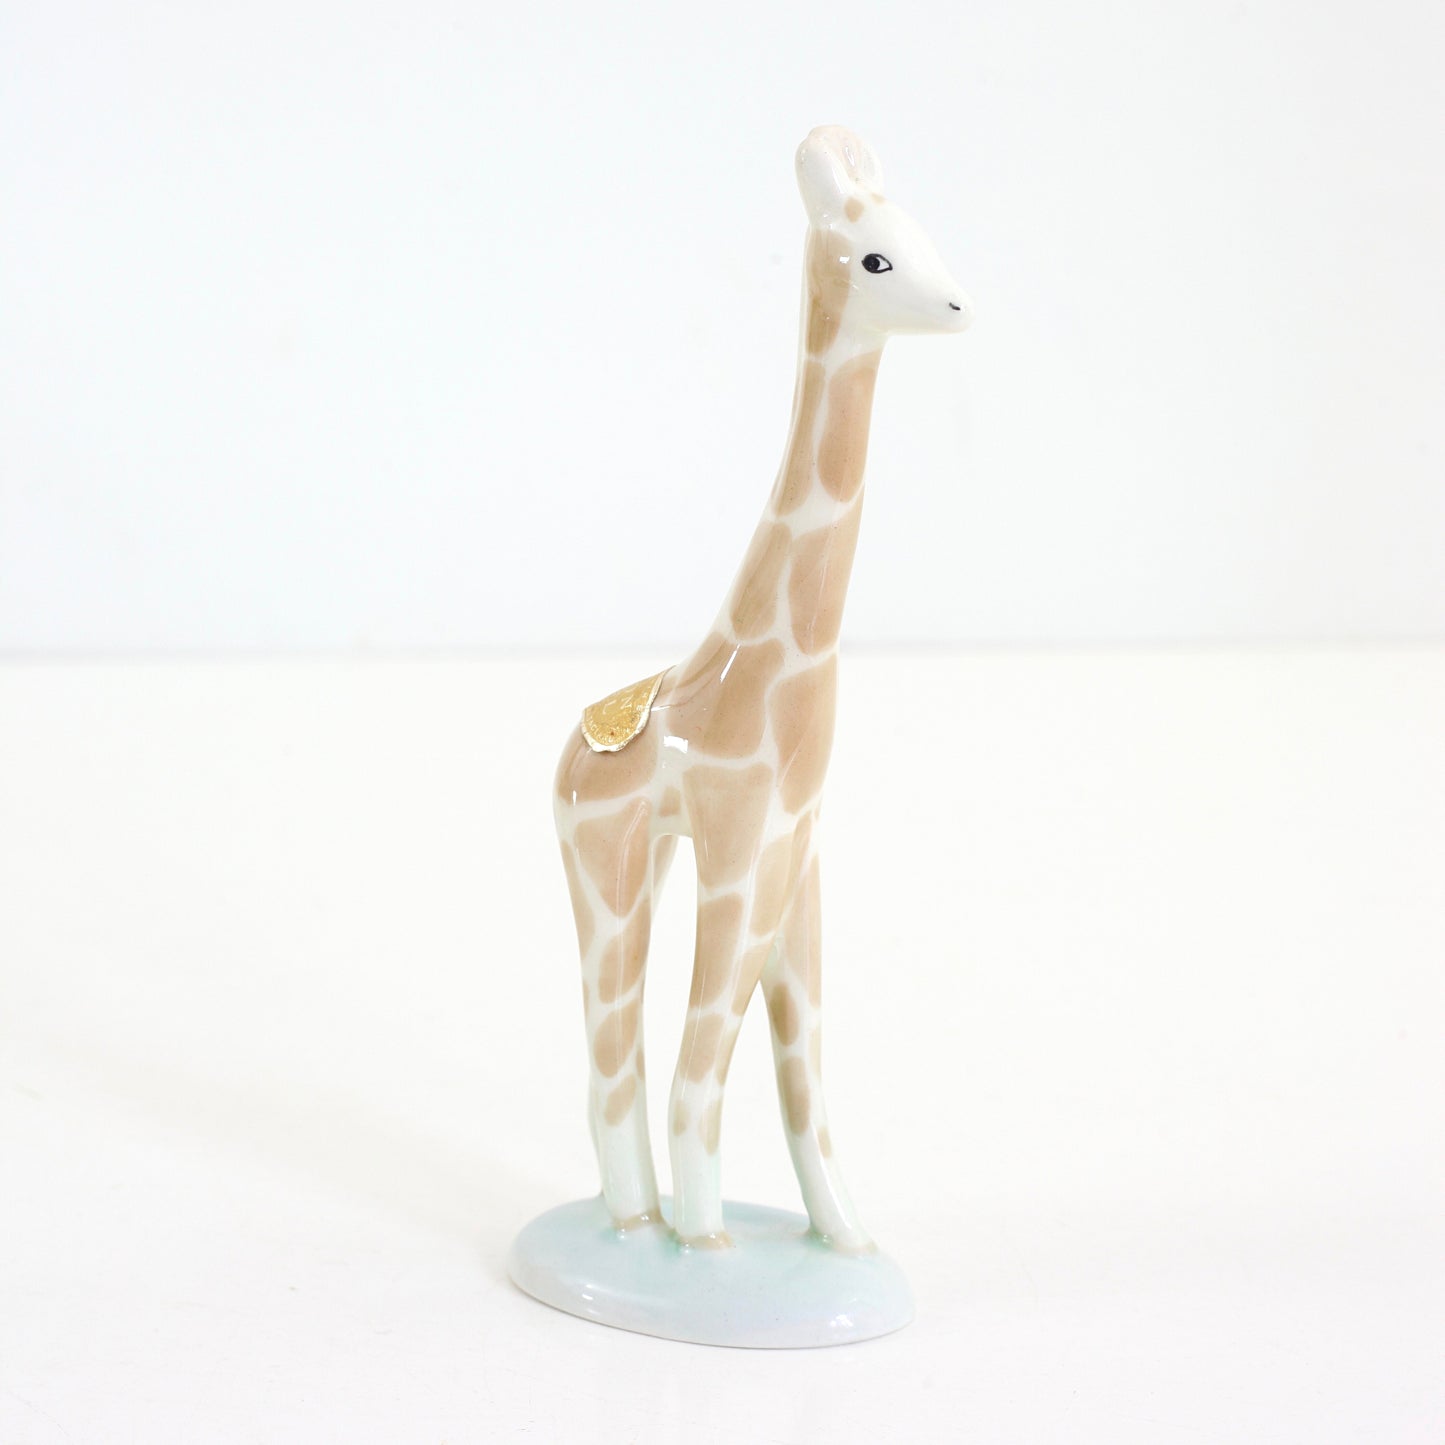 SOLD - Vintage Midwinter England Giraffe Figurine